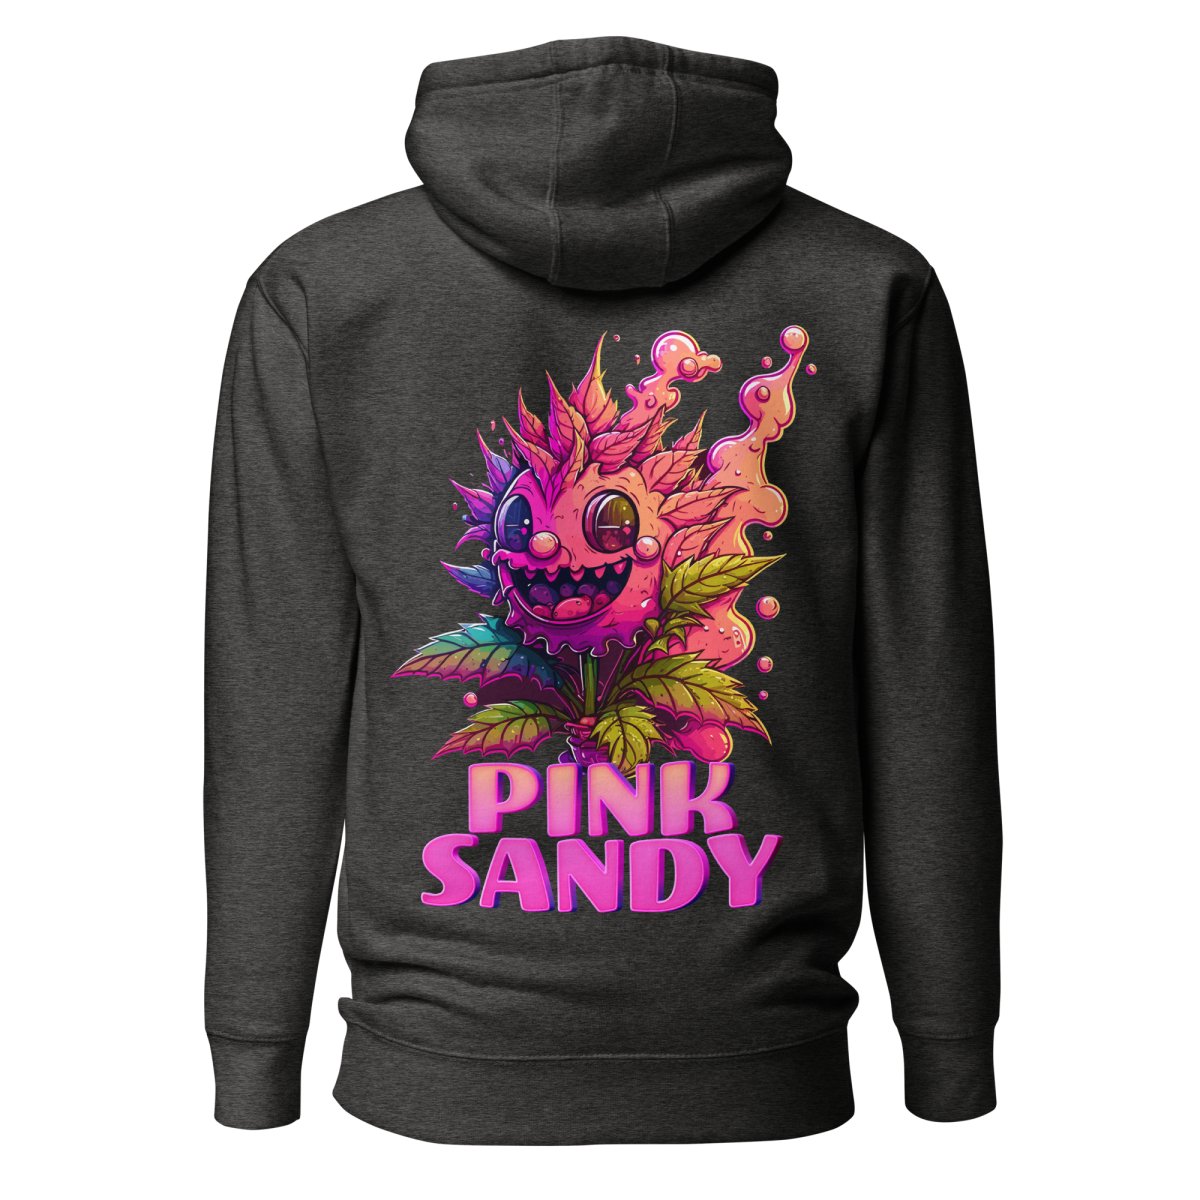 Pink Sandy Hoodie - Mainly High